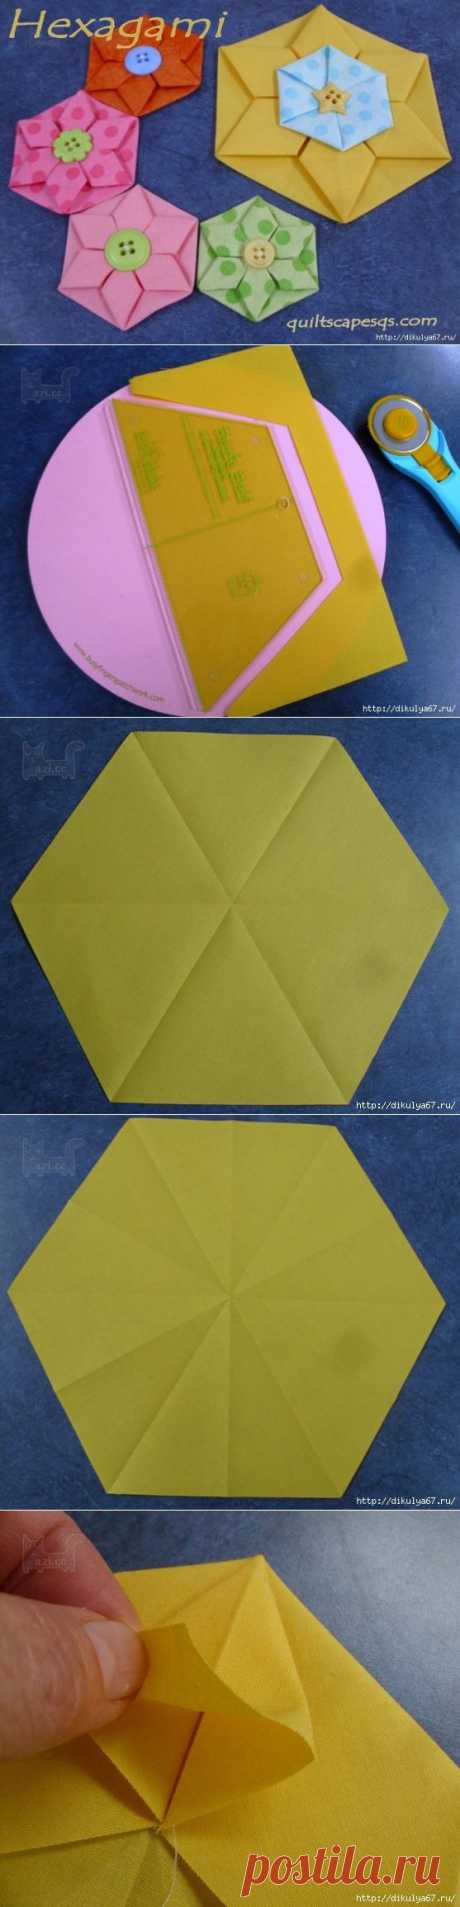 Цветок-оригами шестигранник из ткани. МК